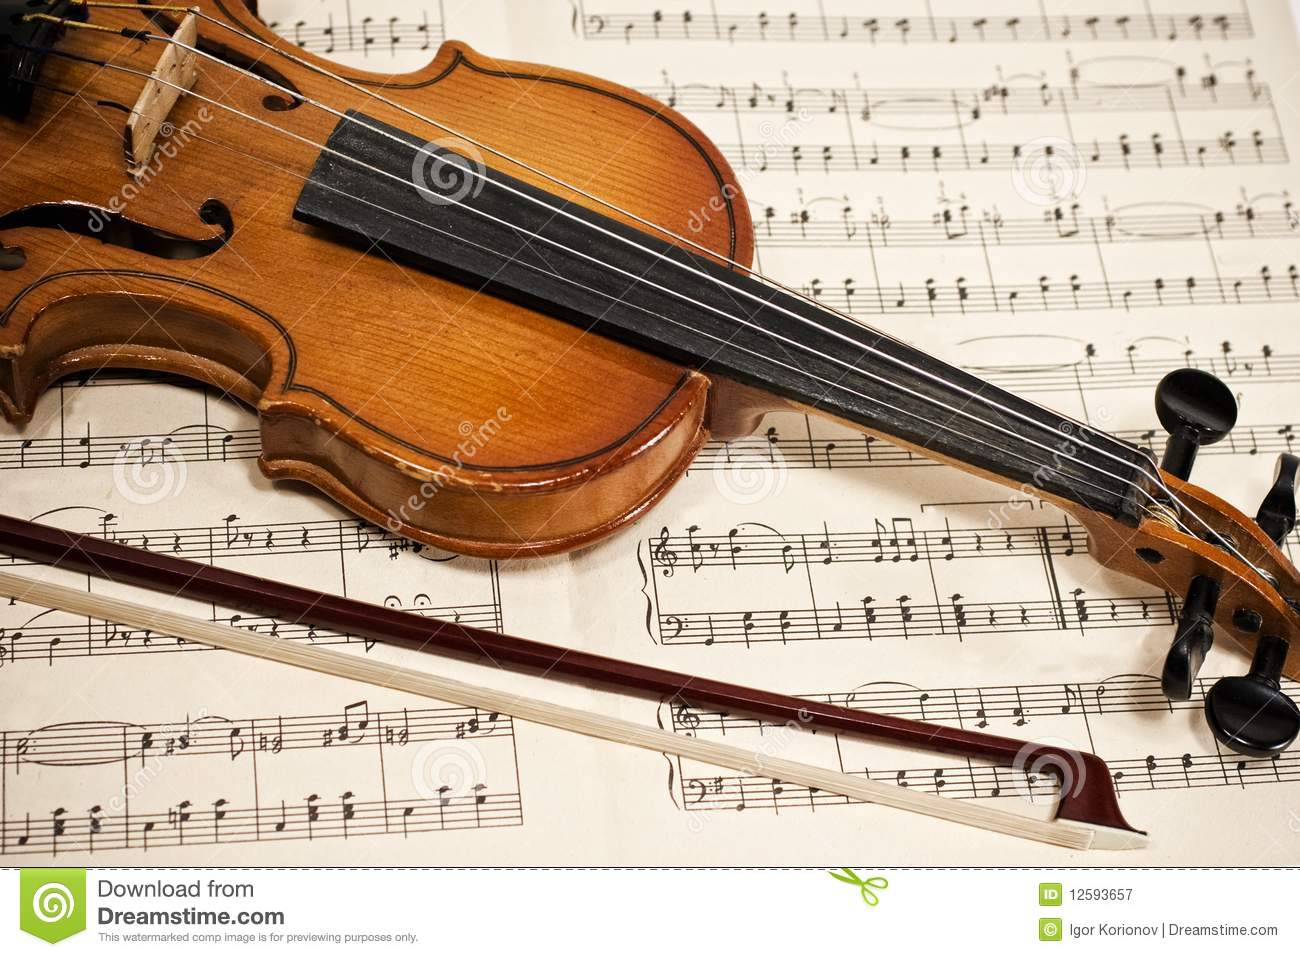 yanni music with violin